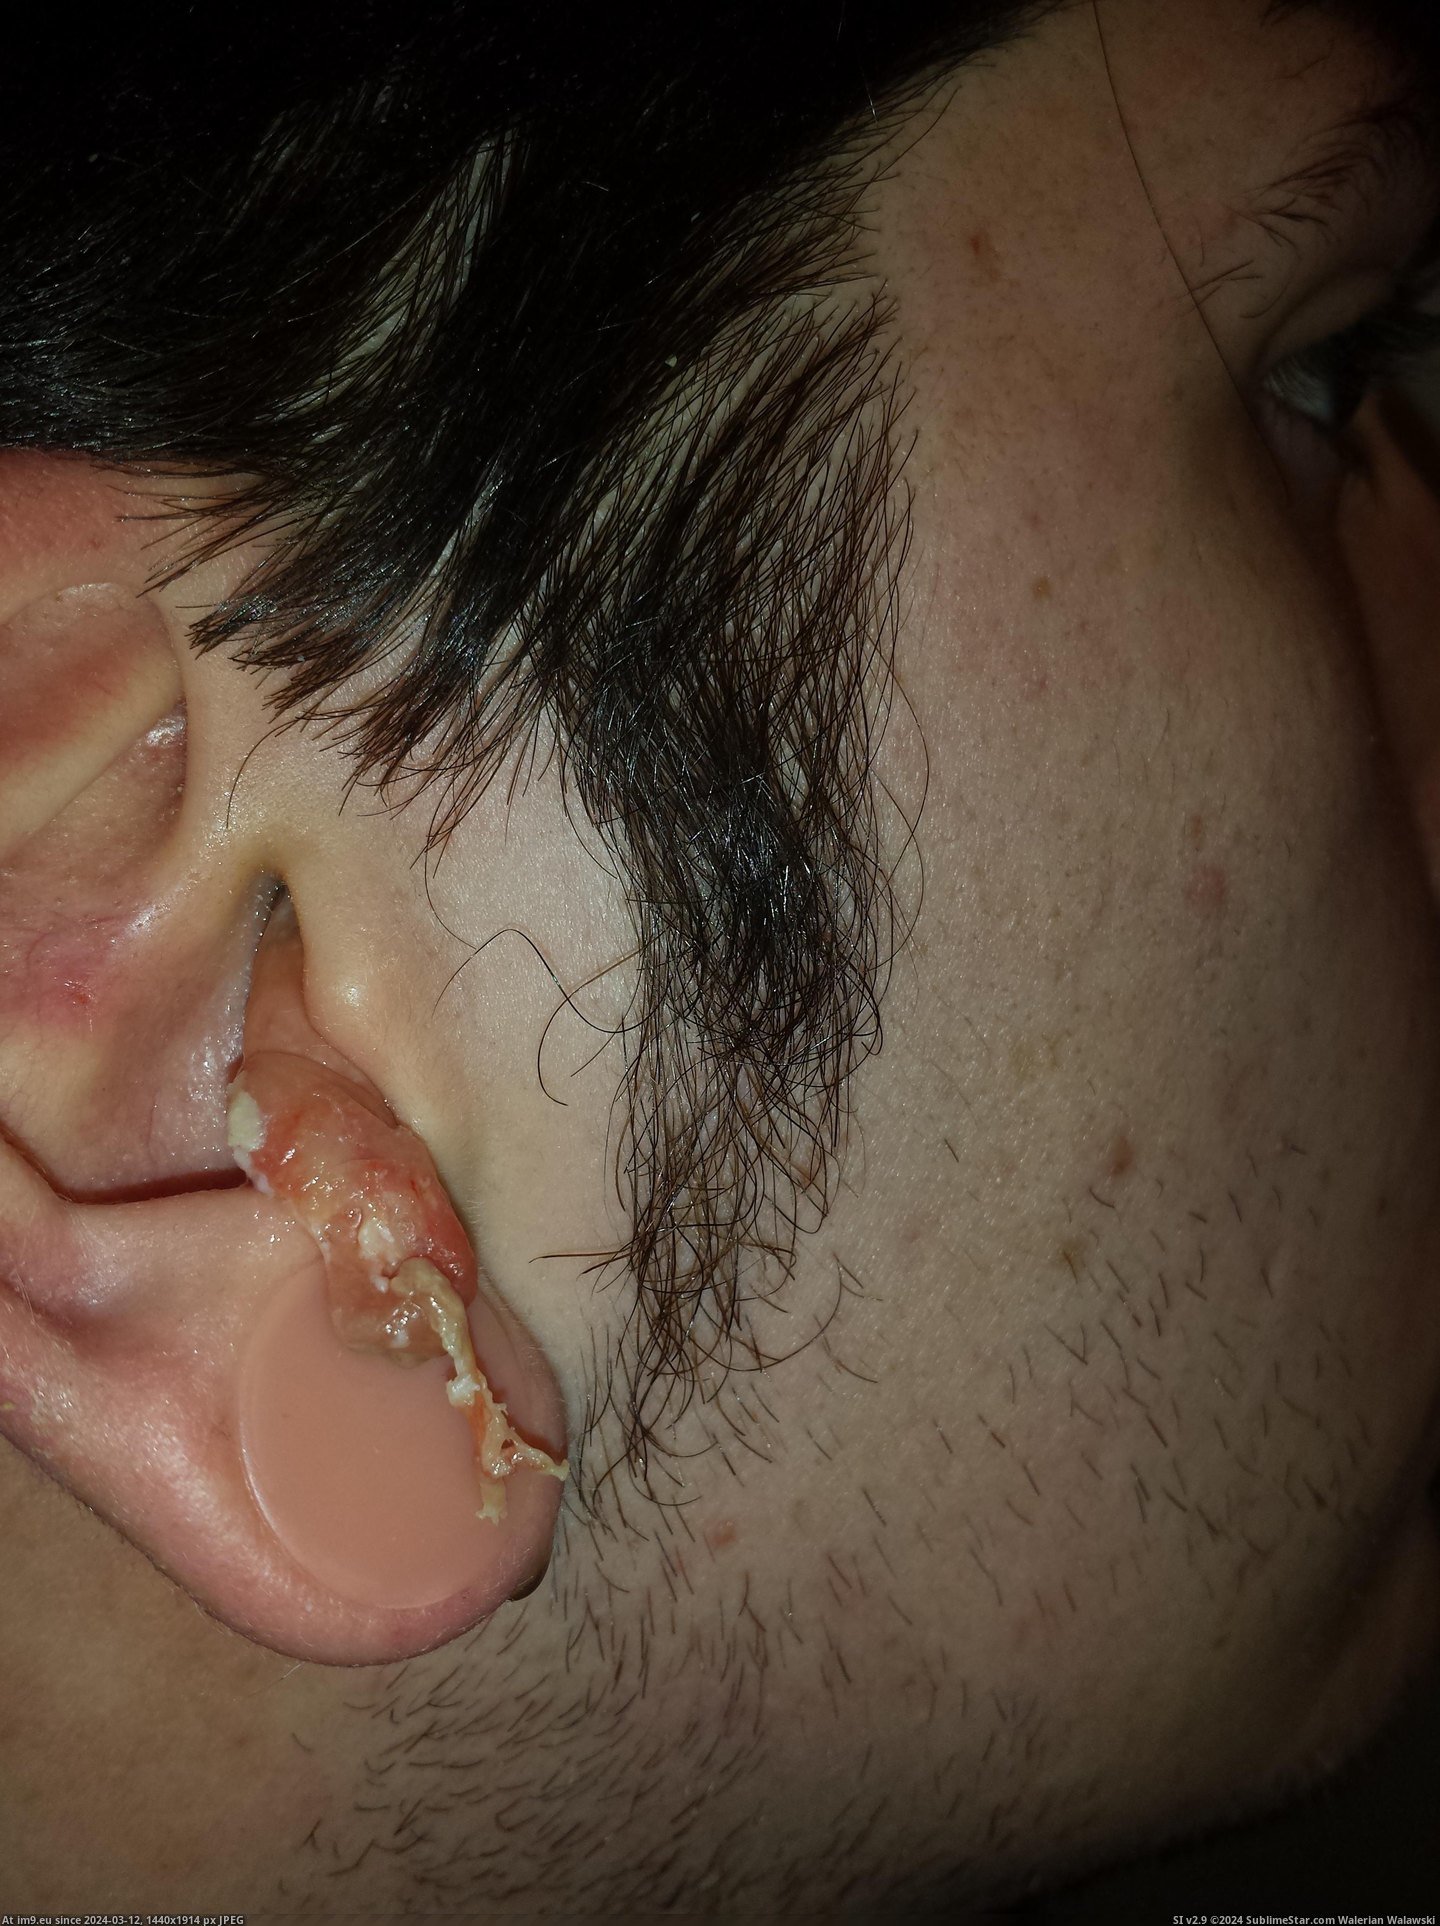 #Wtf #Ear #Infection #Crazy [Wtf] My crazy ear infection 9 Pic. (Obraz z album My r/WTF favs))